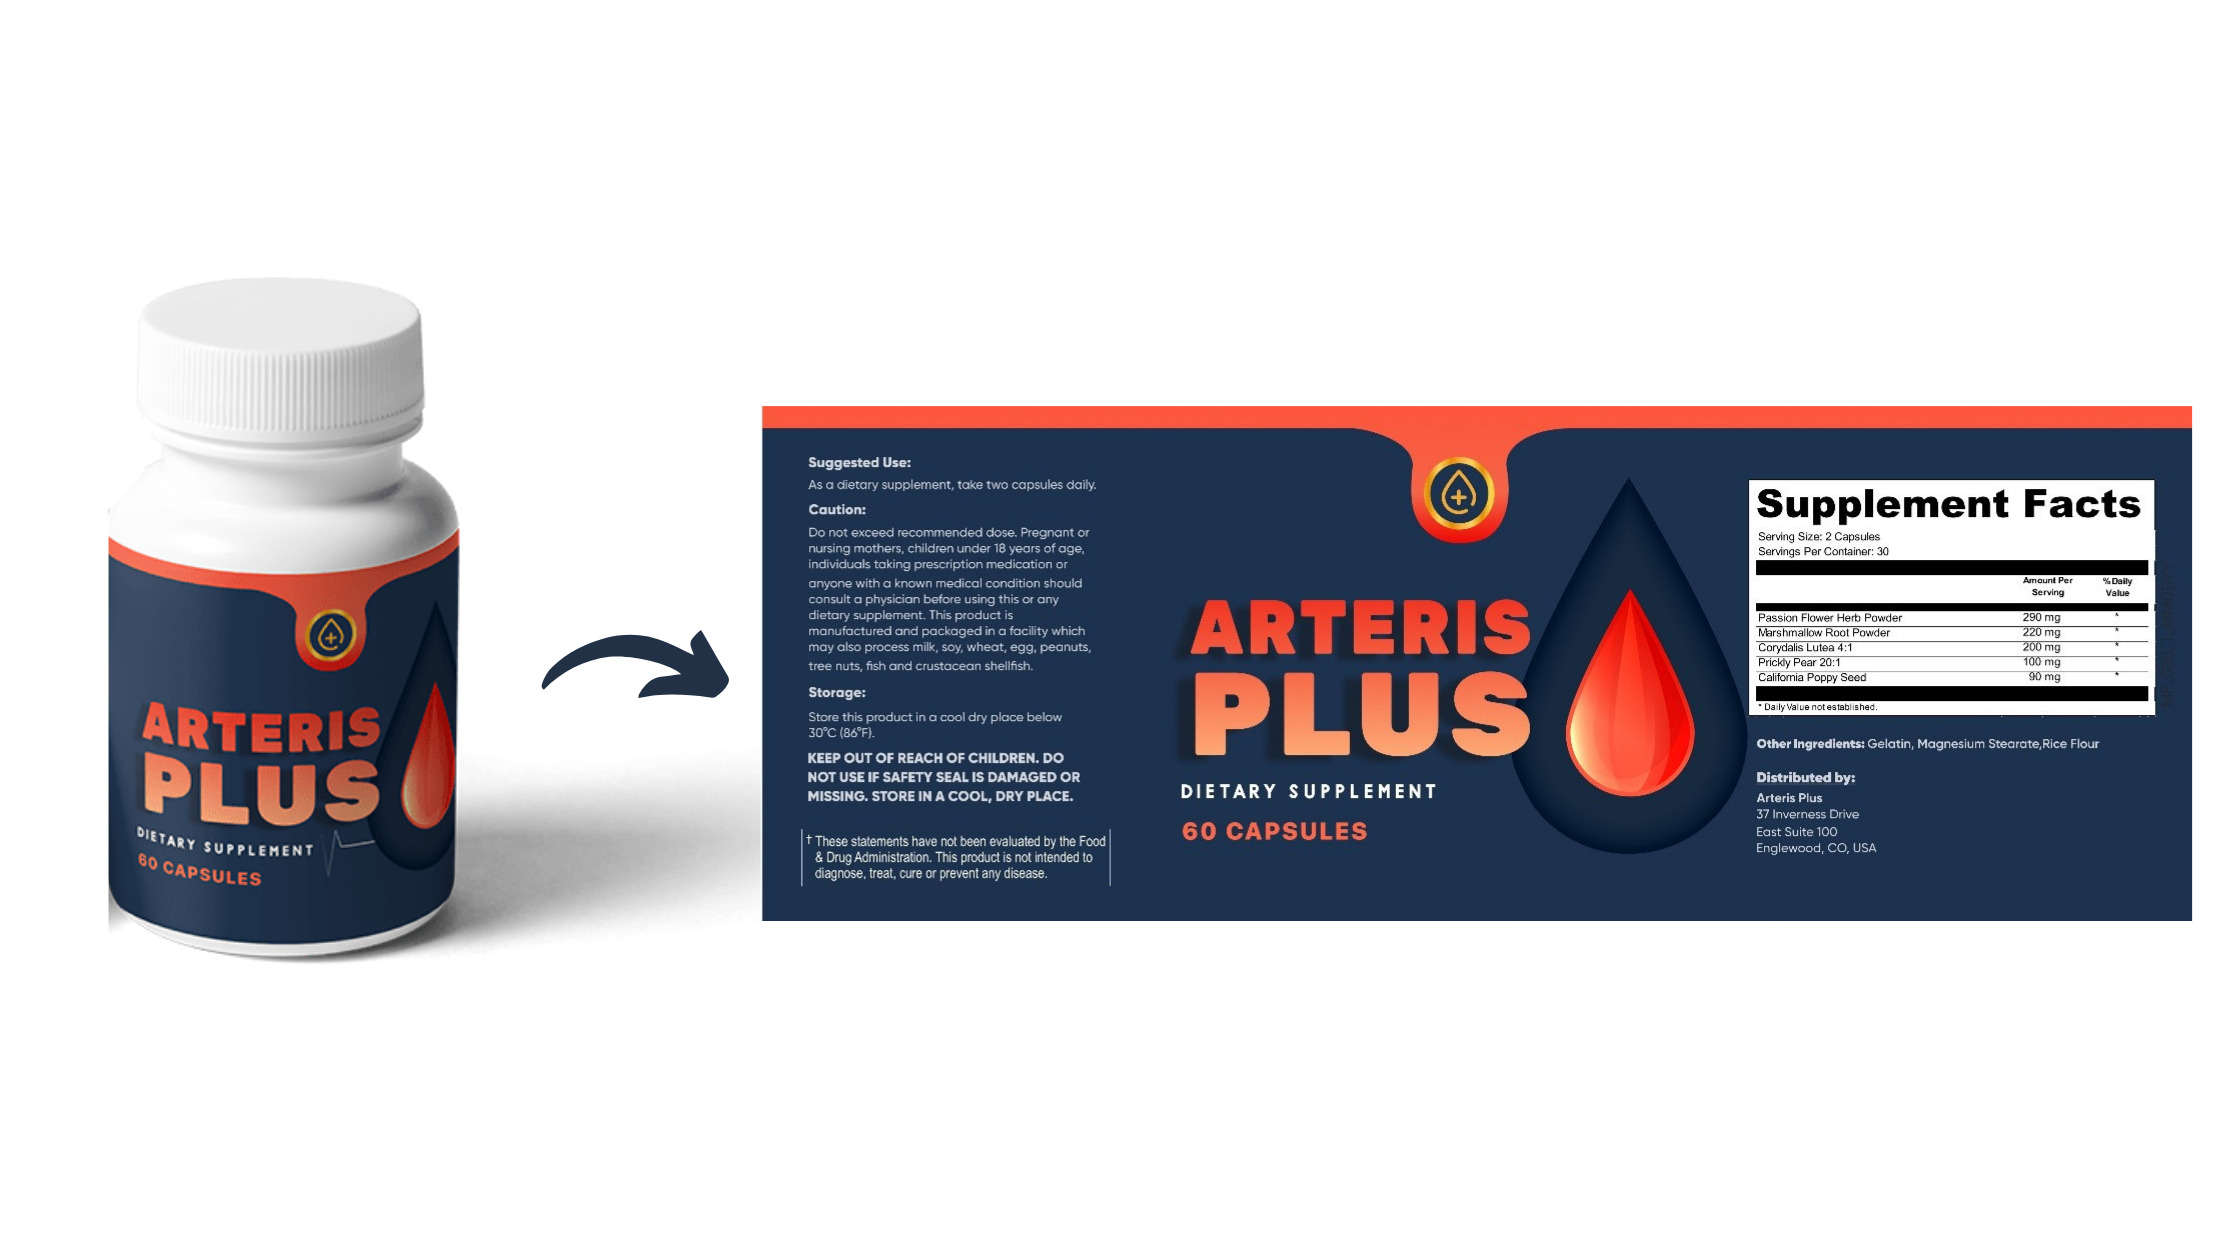 Arteris Plus is a legit dietary supplement